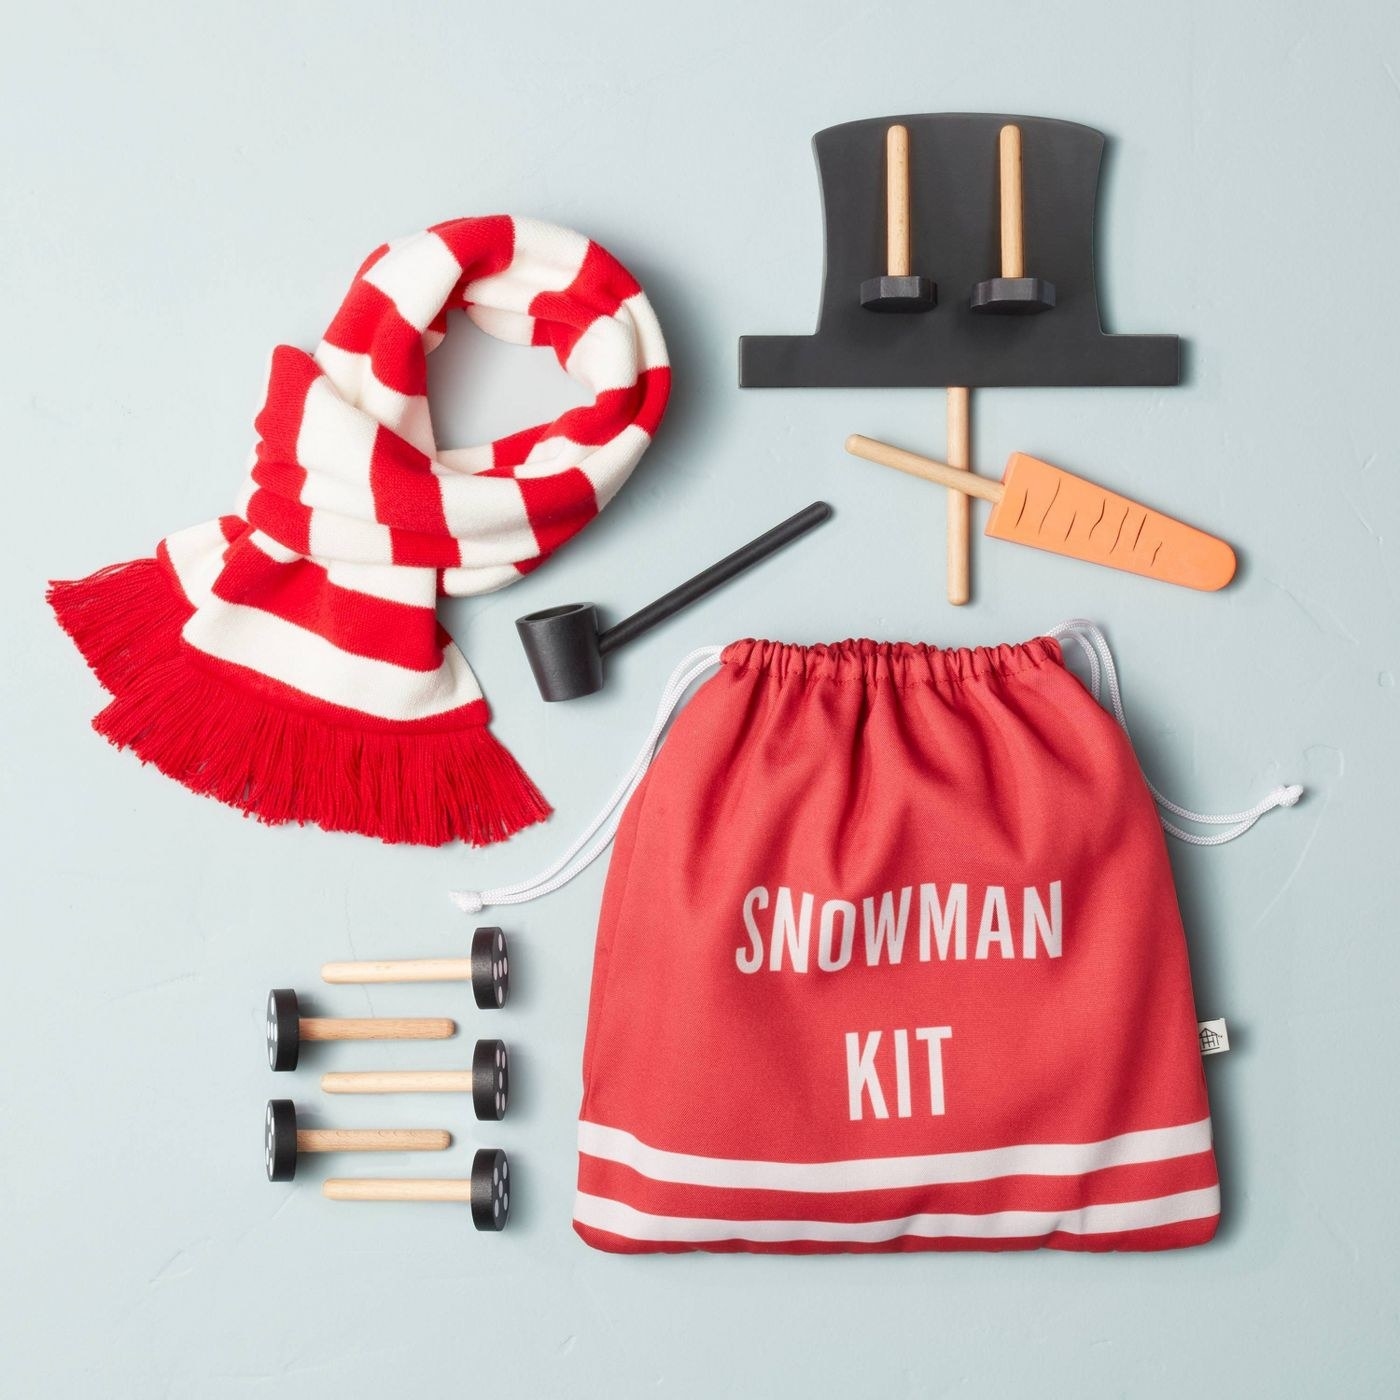 The snowman kit.